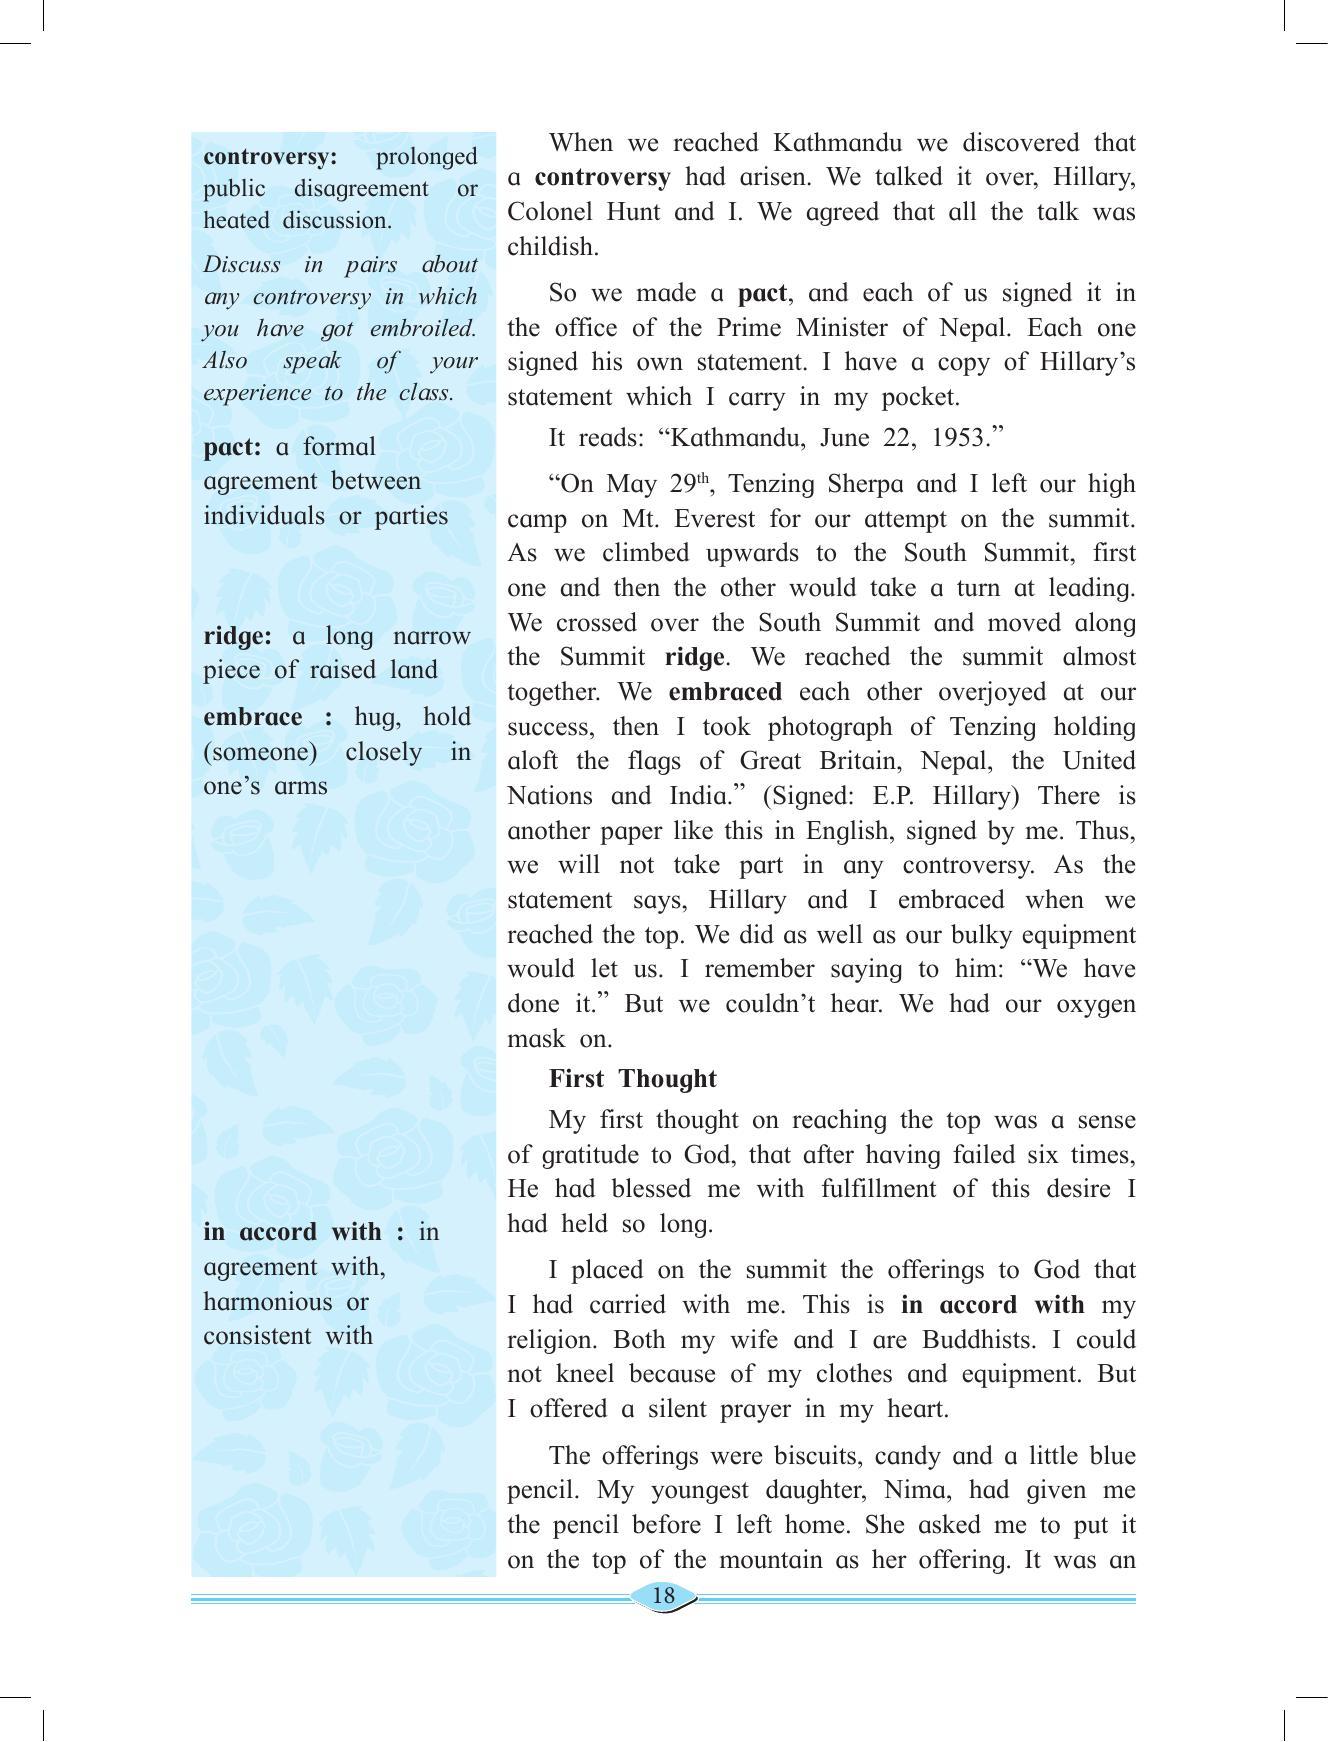 Maharashtra Board Class 11 English Textbook - Page 32